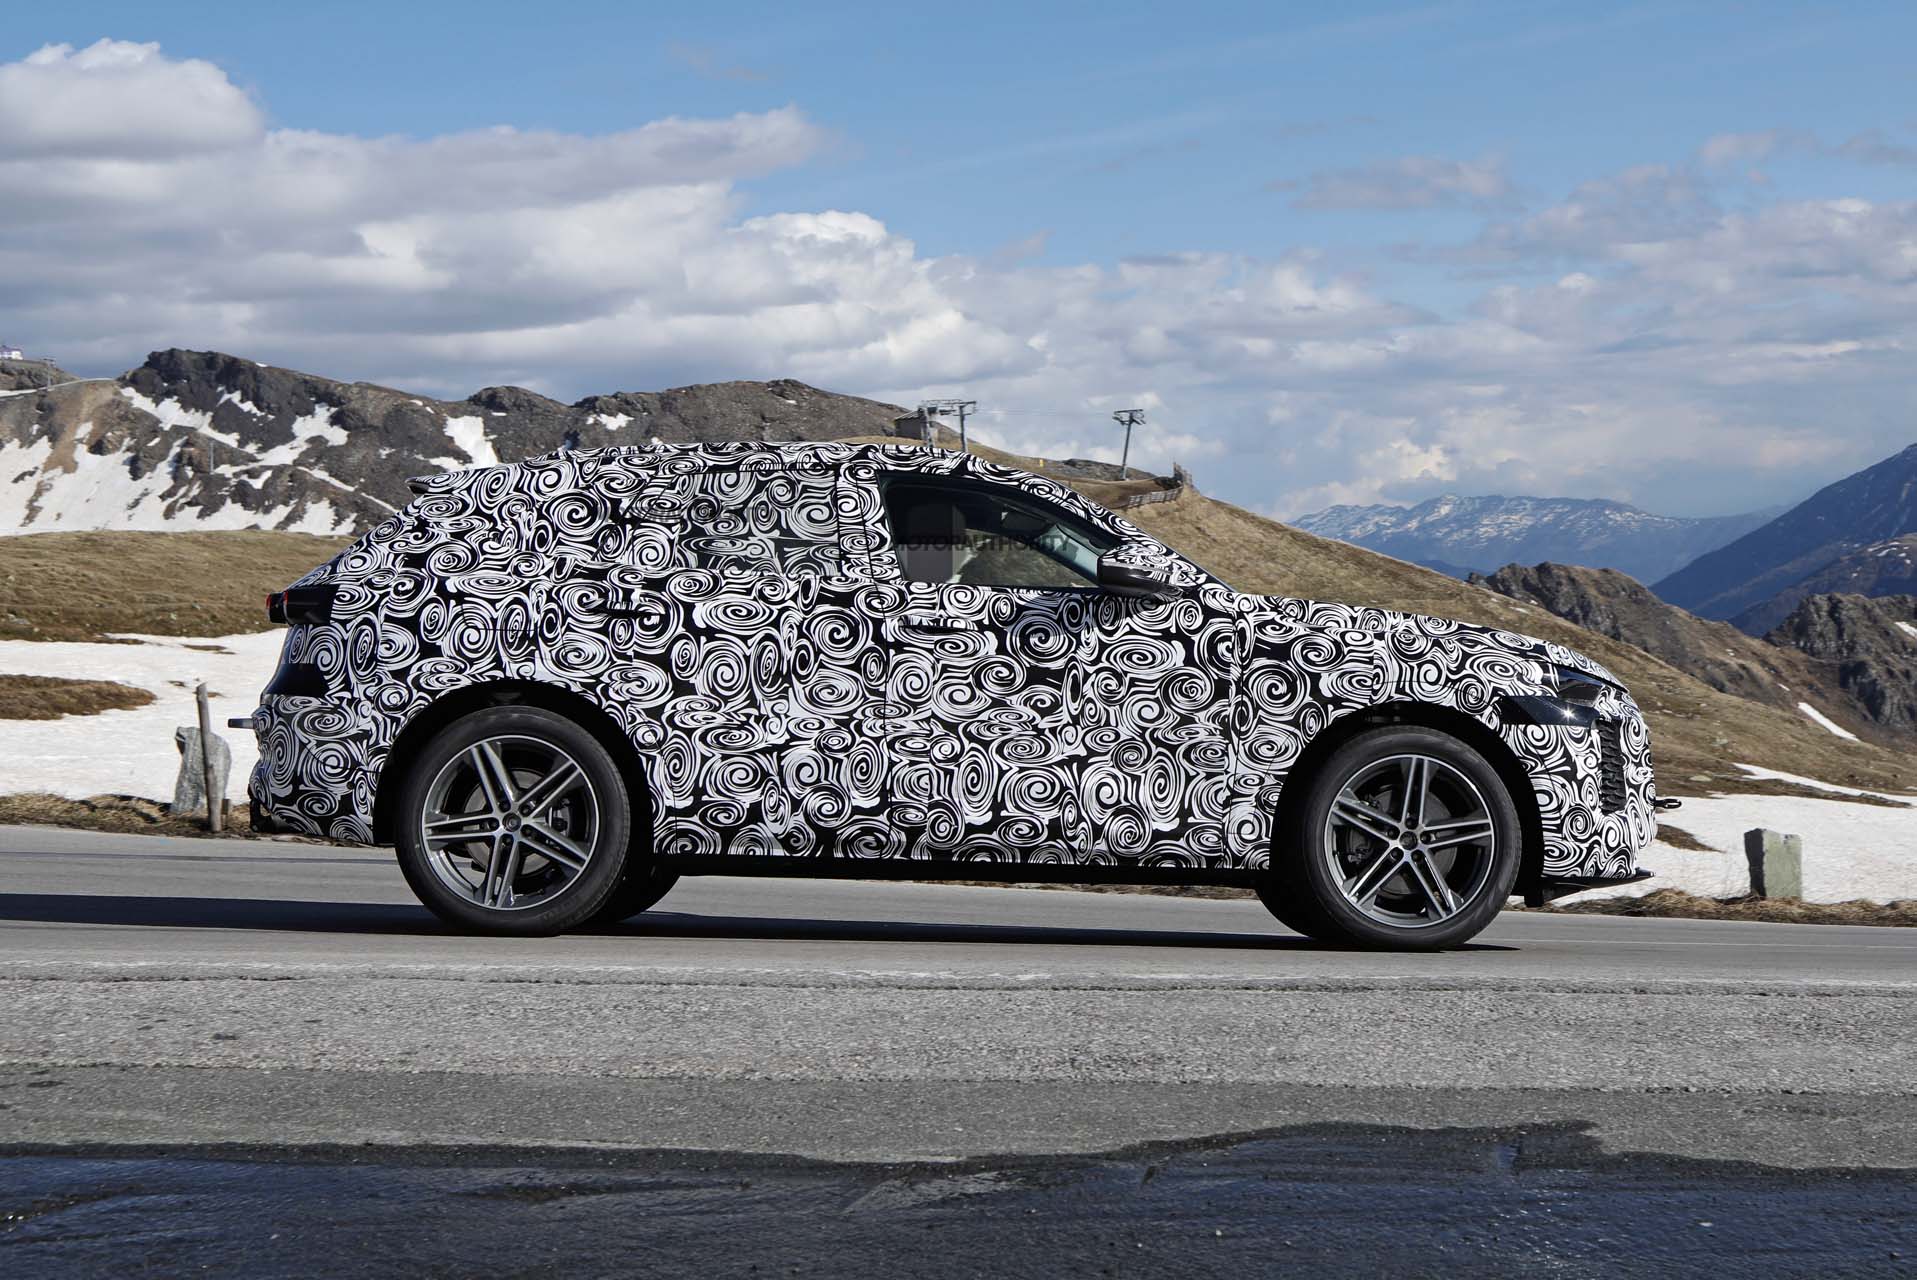 Audi Q5 spy shots, BMW 3.0 CSL production: Car News Headlines Auto Recent